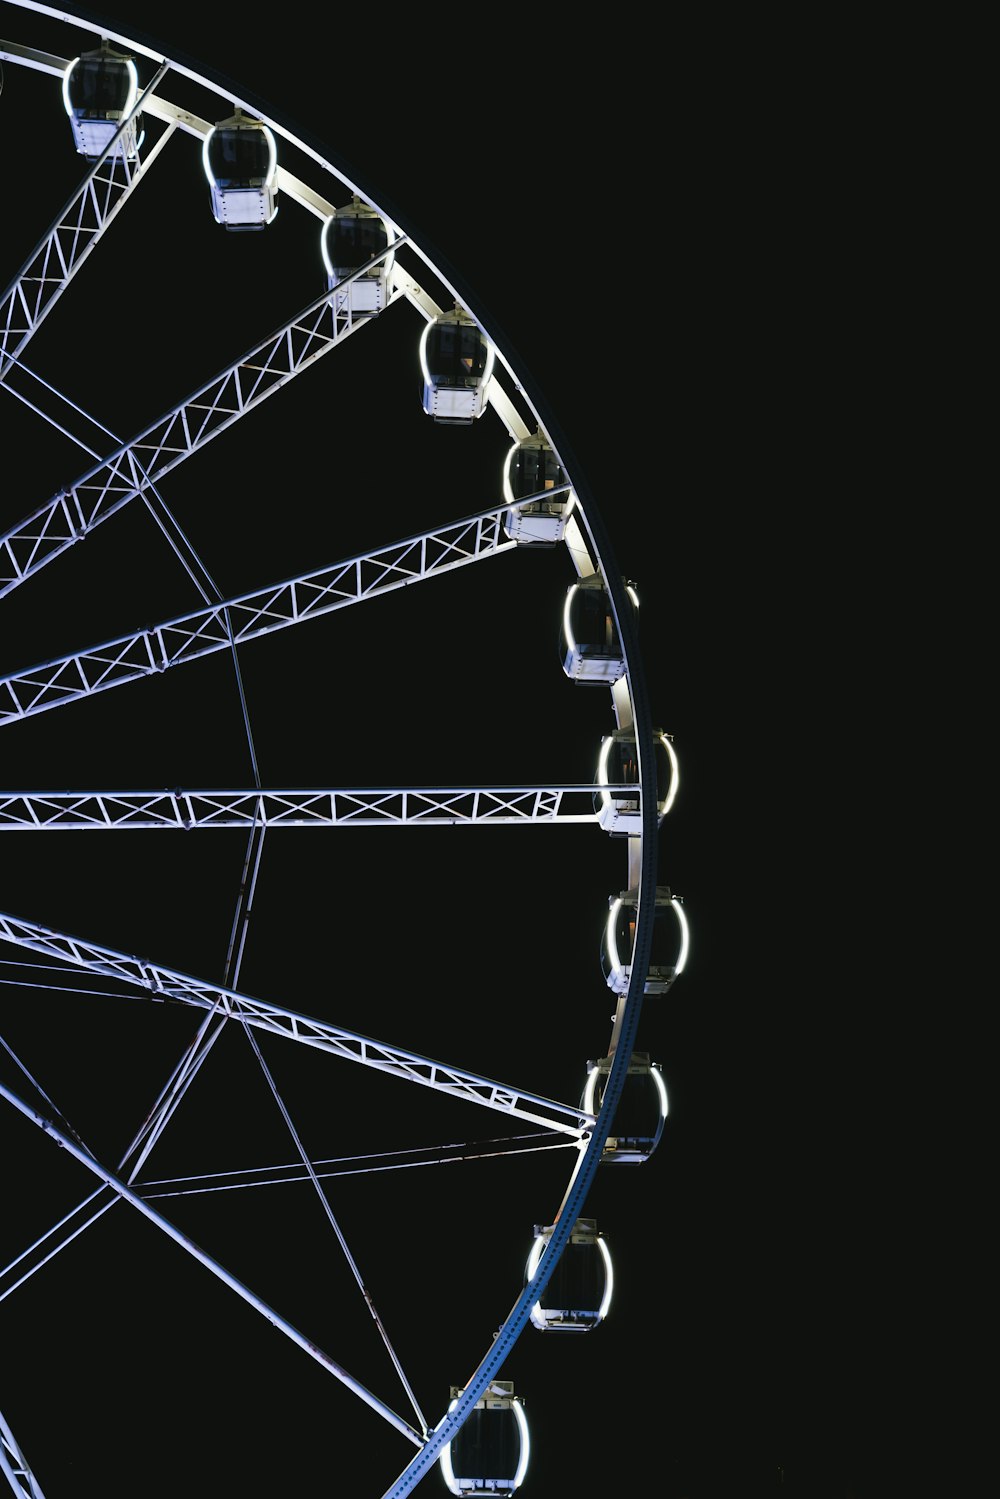 a ferris wheel lit up against a black background